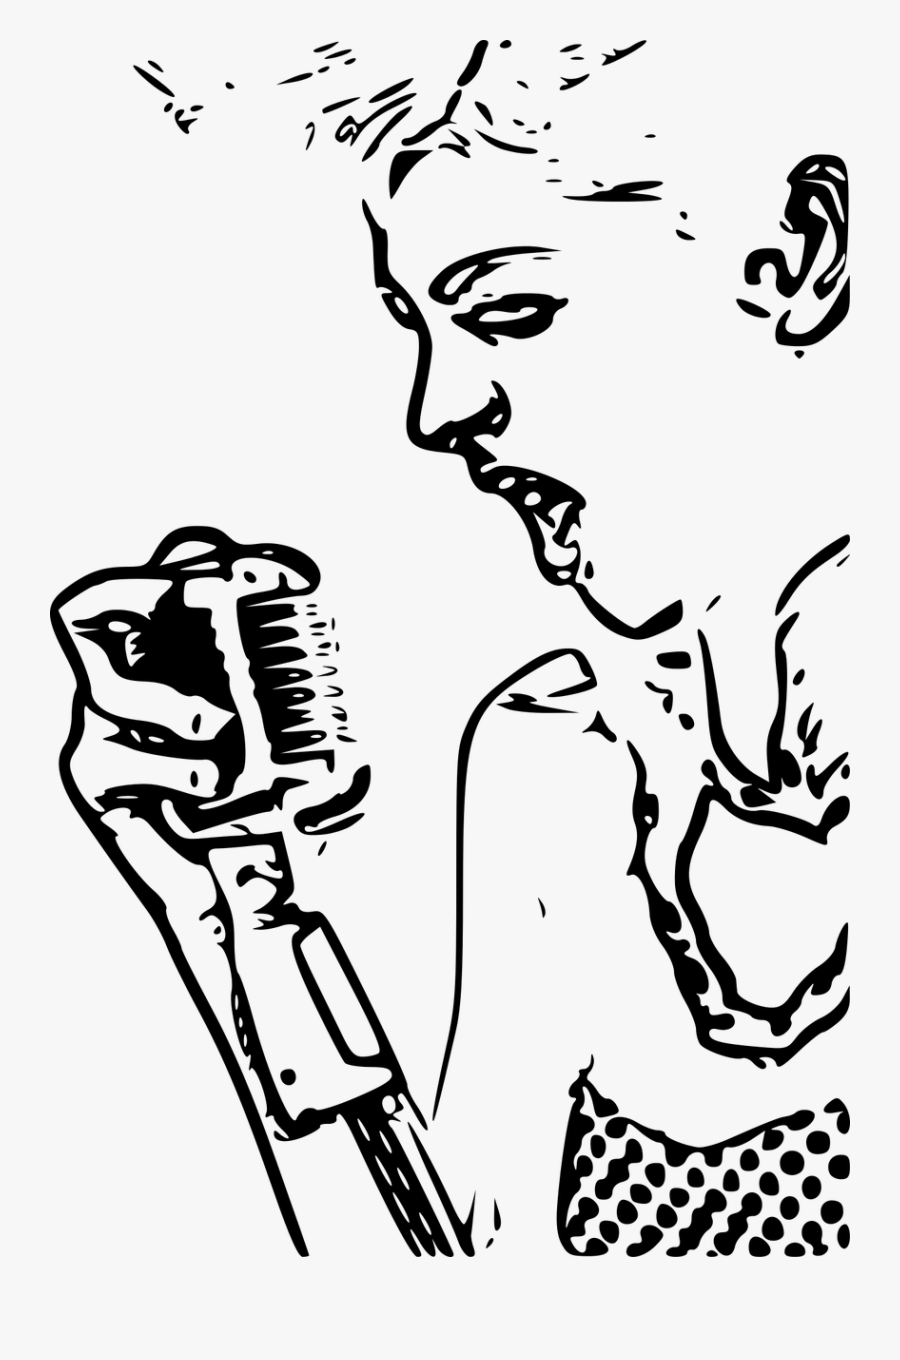 Microphone Karaoke Singing Drawing - Karaoke Singer Clip Art, Transparent Clipart